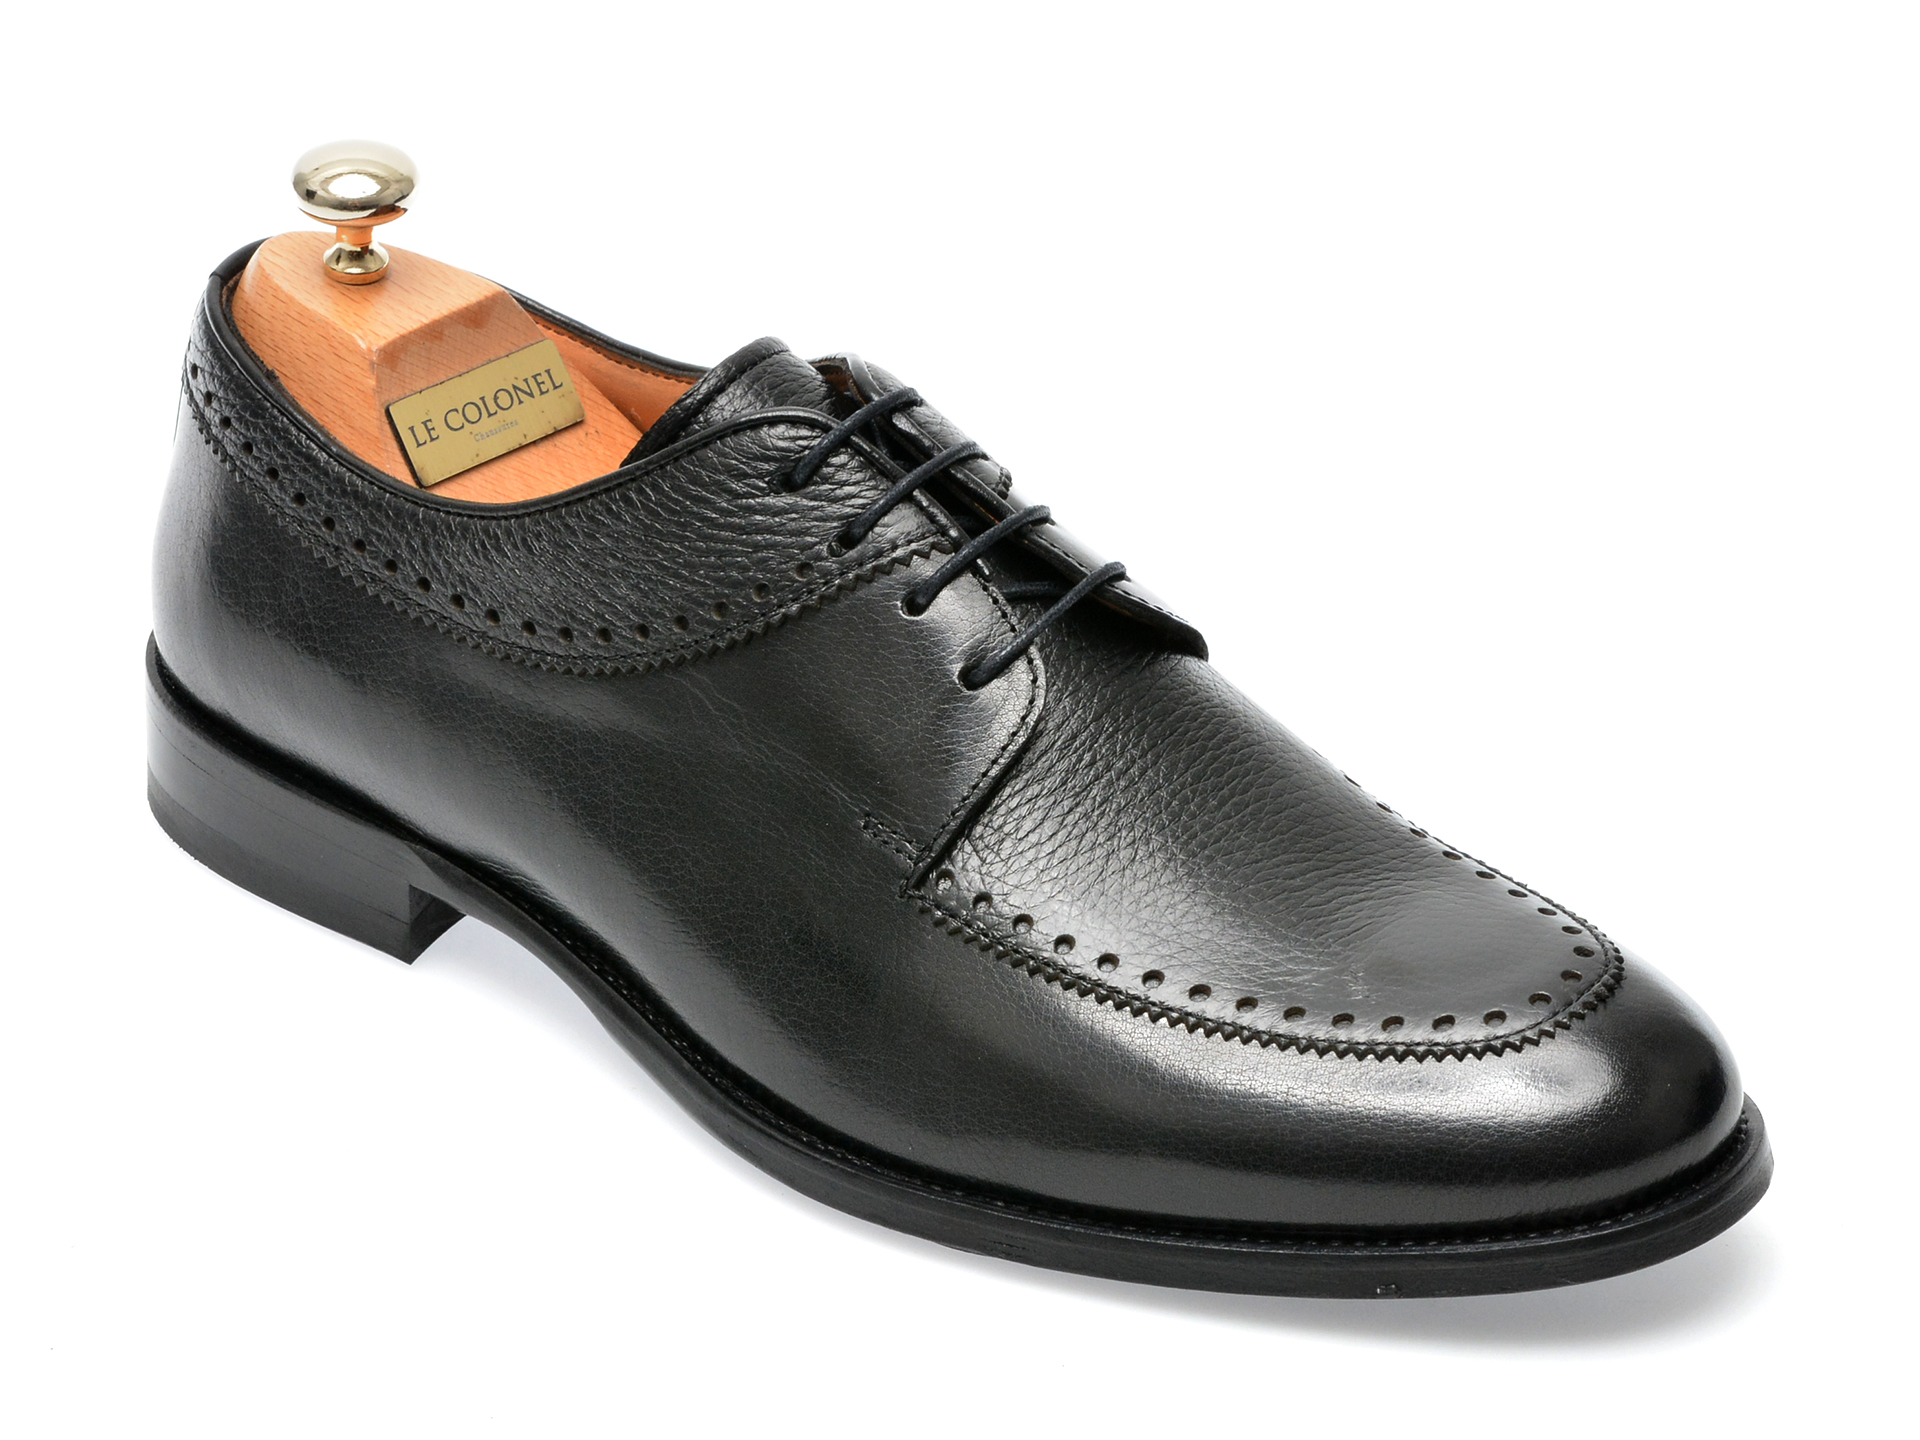 Pantofi LE COLONEL negri, 45266, din piele naturala /barbati/pantofi /barbati/pantofi